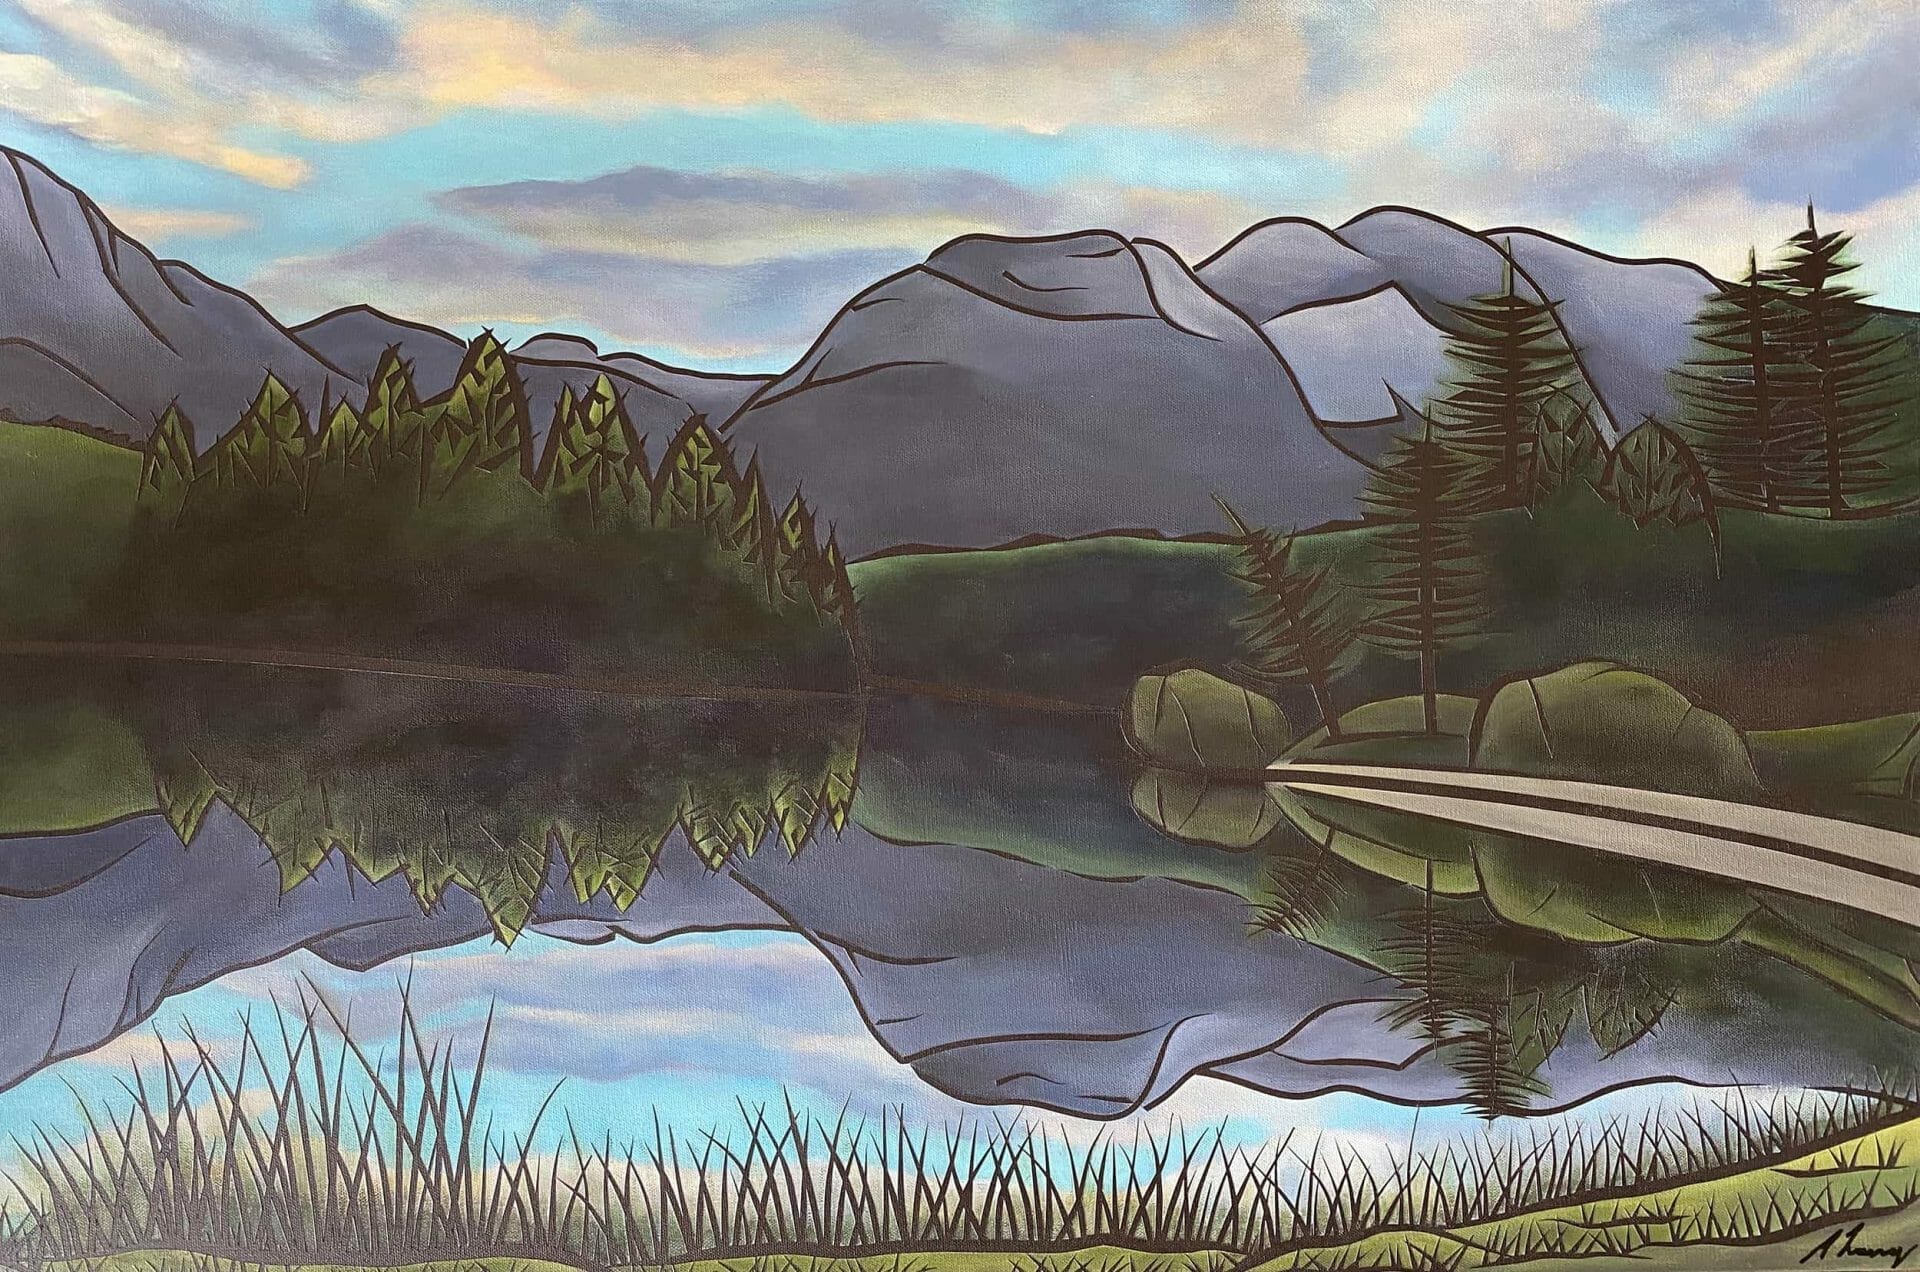 Dreamy - Canadian Original Artwork For Sale by Amanda Maglis-Long - Calgary, AB Local Artist - Mountains